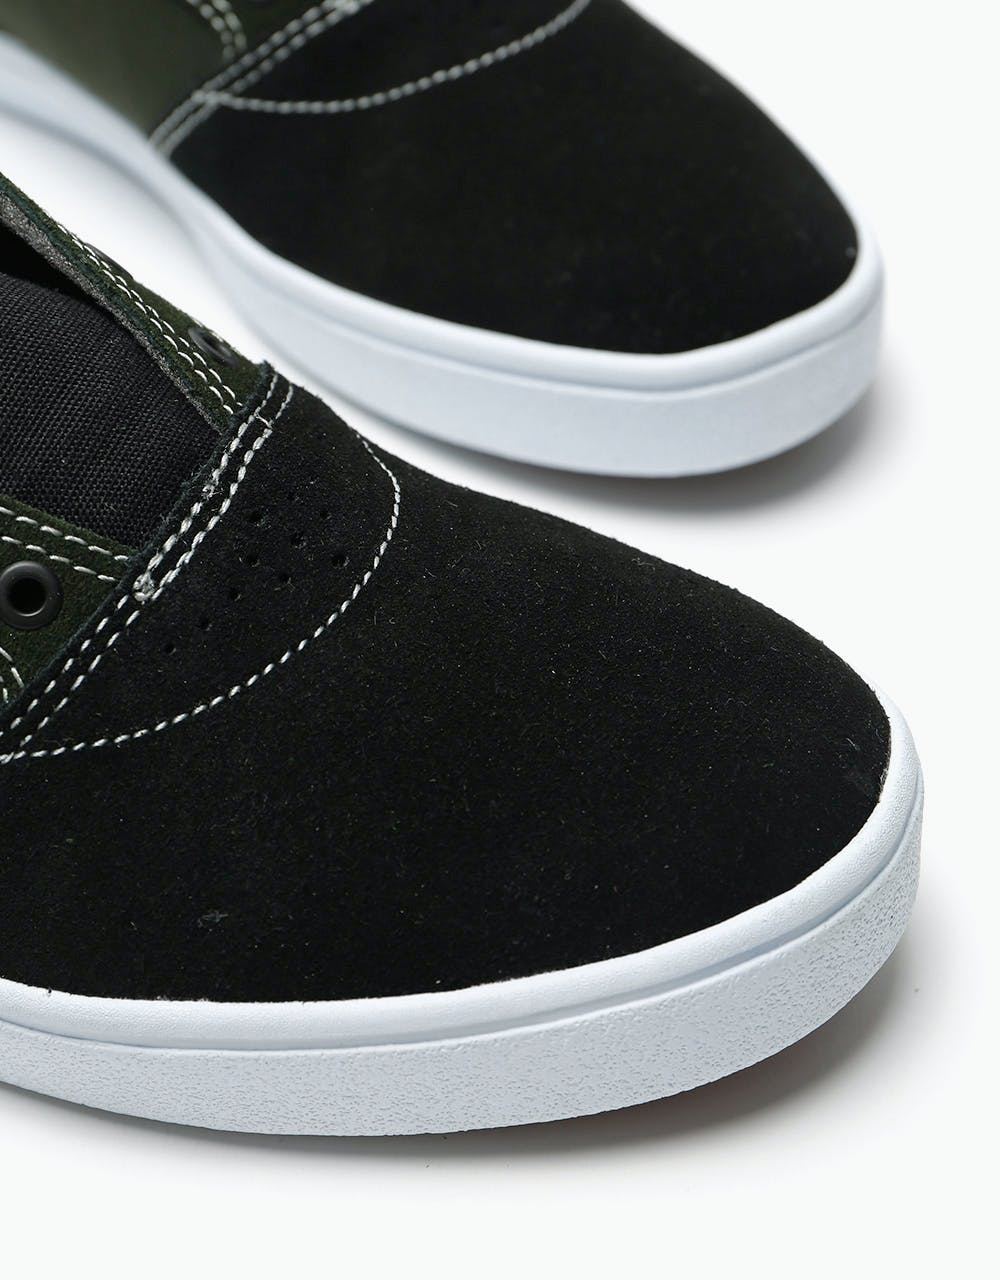 Emerica Figgy Dose Skate Shoes - Black/Green/White